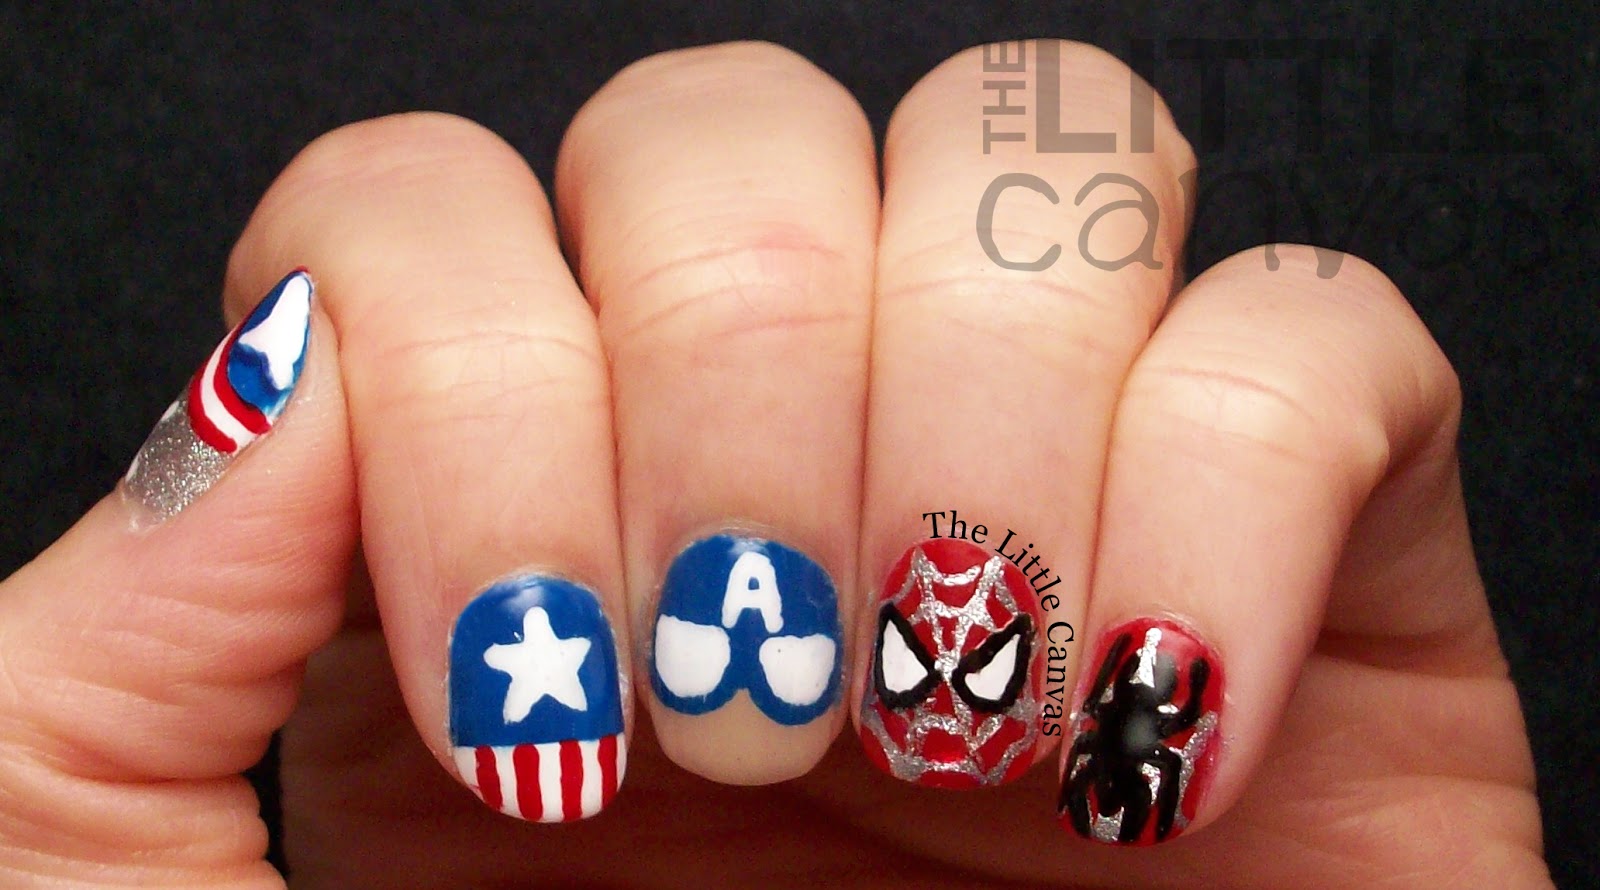 5. "Captain America Nail Designs" - wide 2